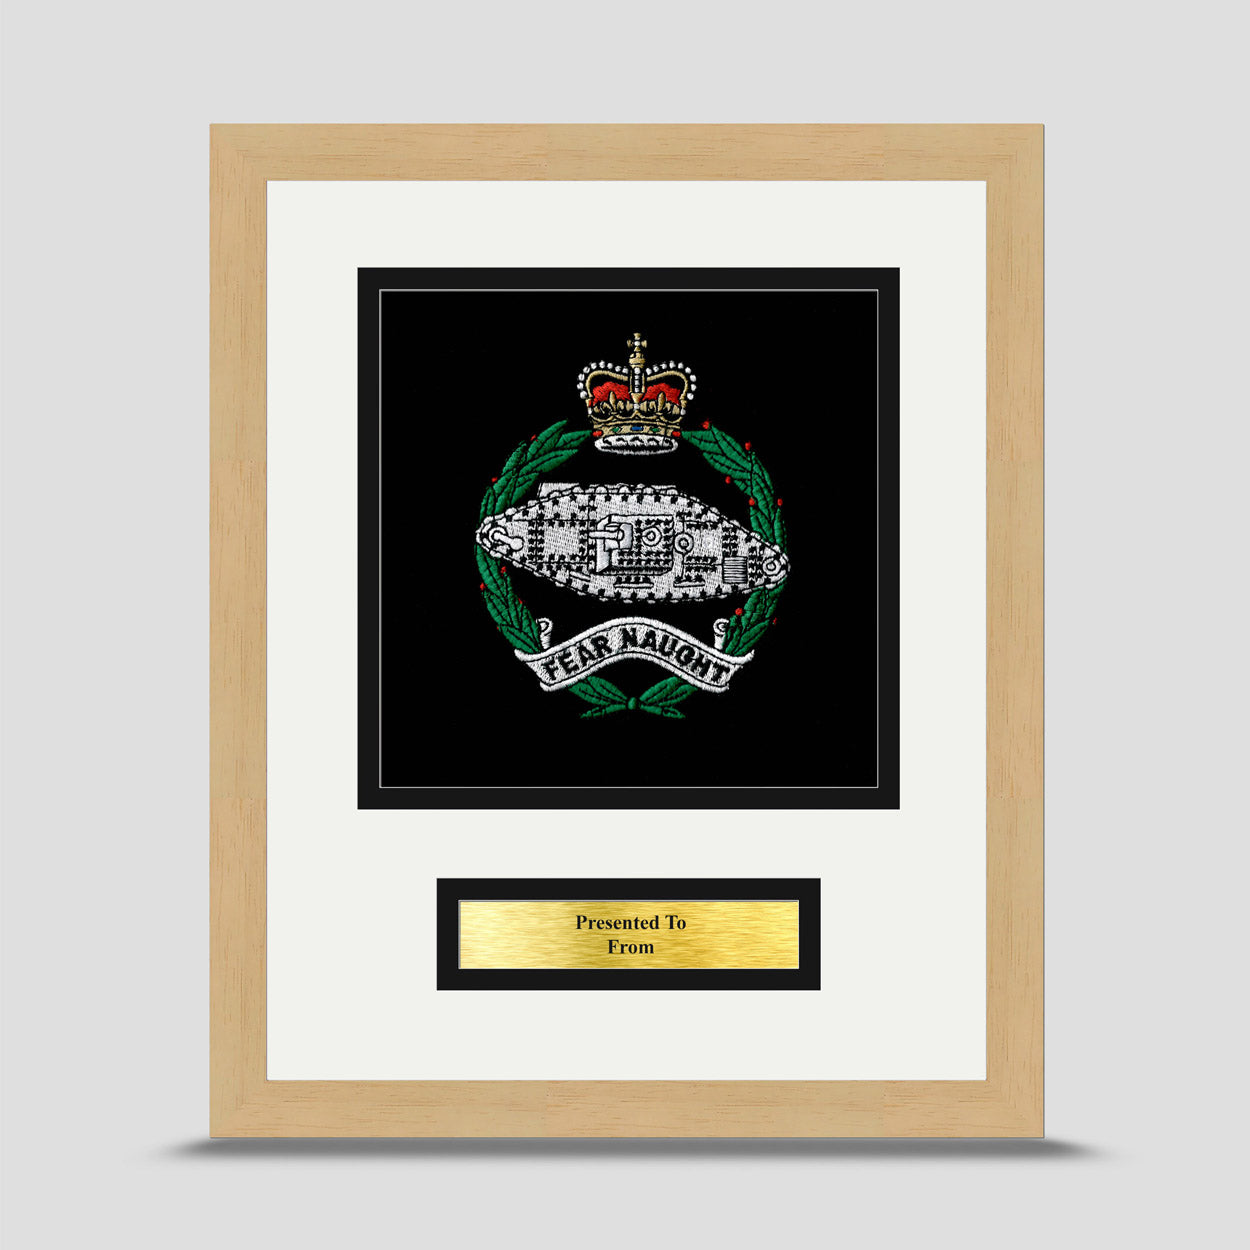 Royal Tank Regiment Framed Military Embroidery Presentation RTR